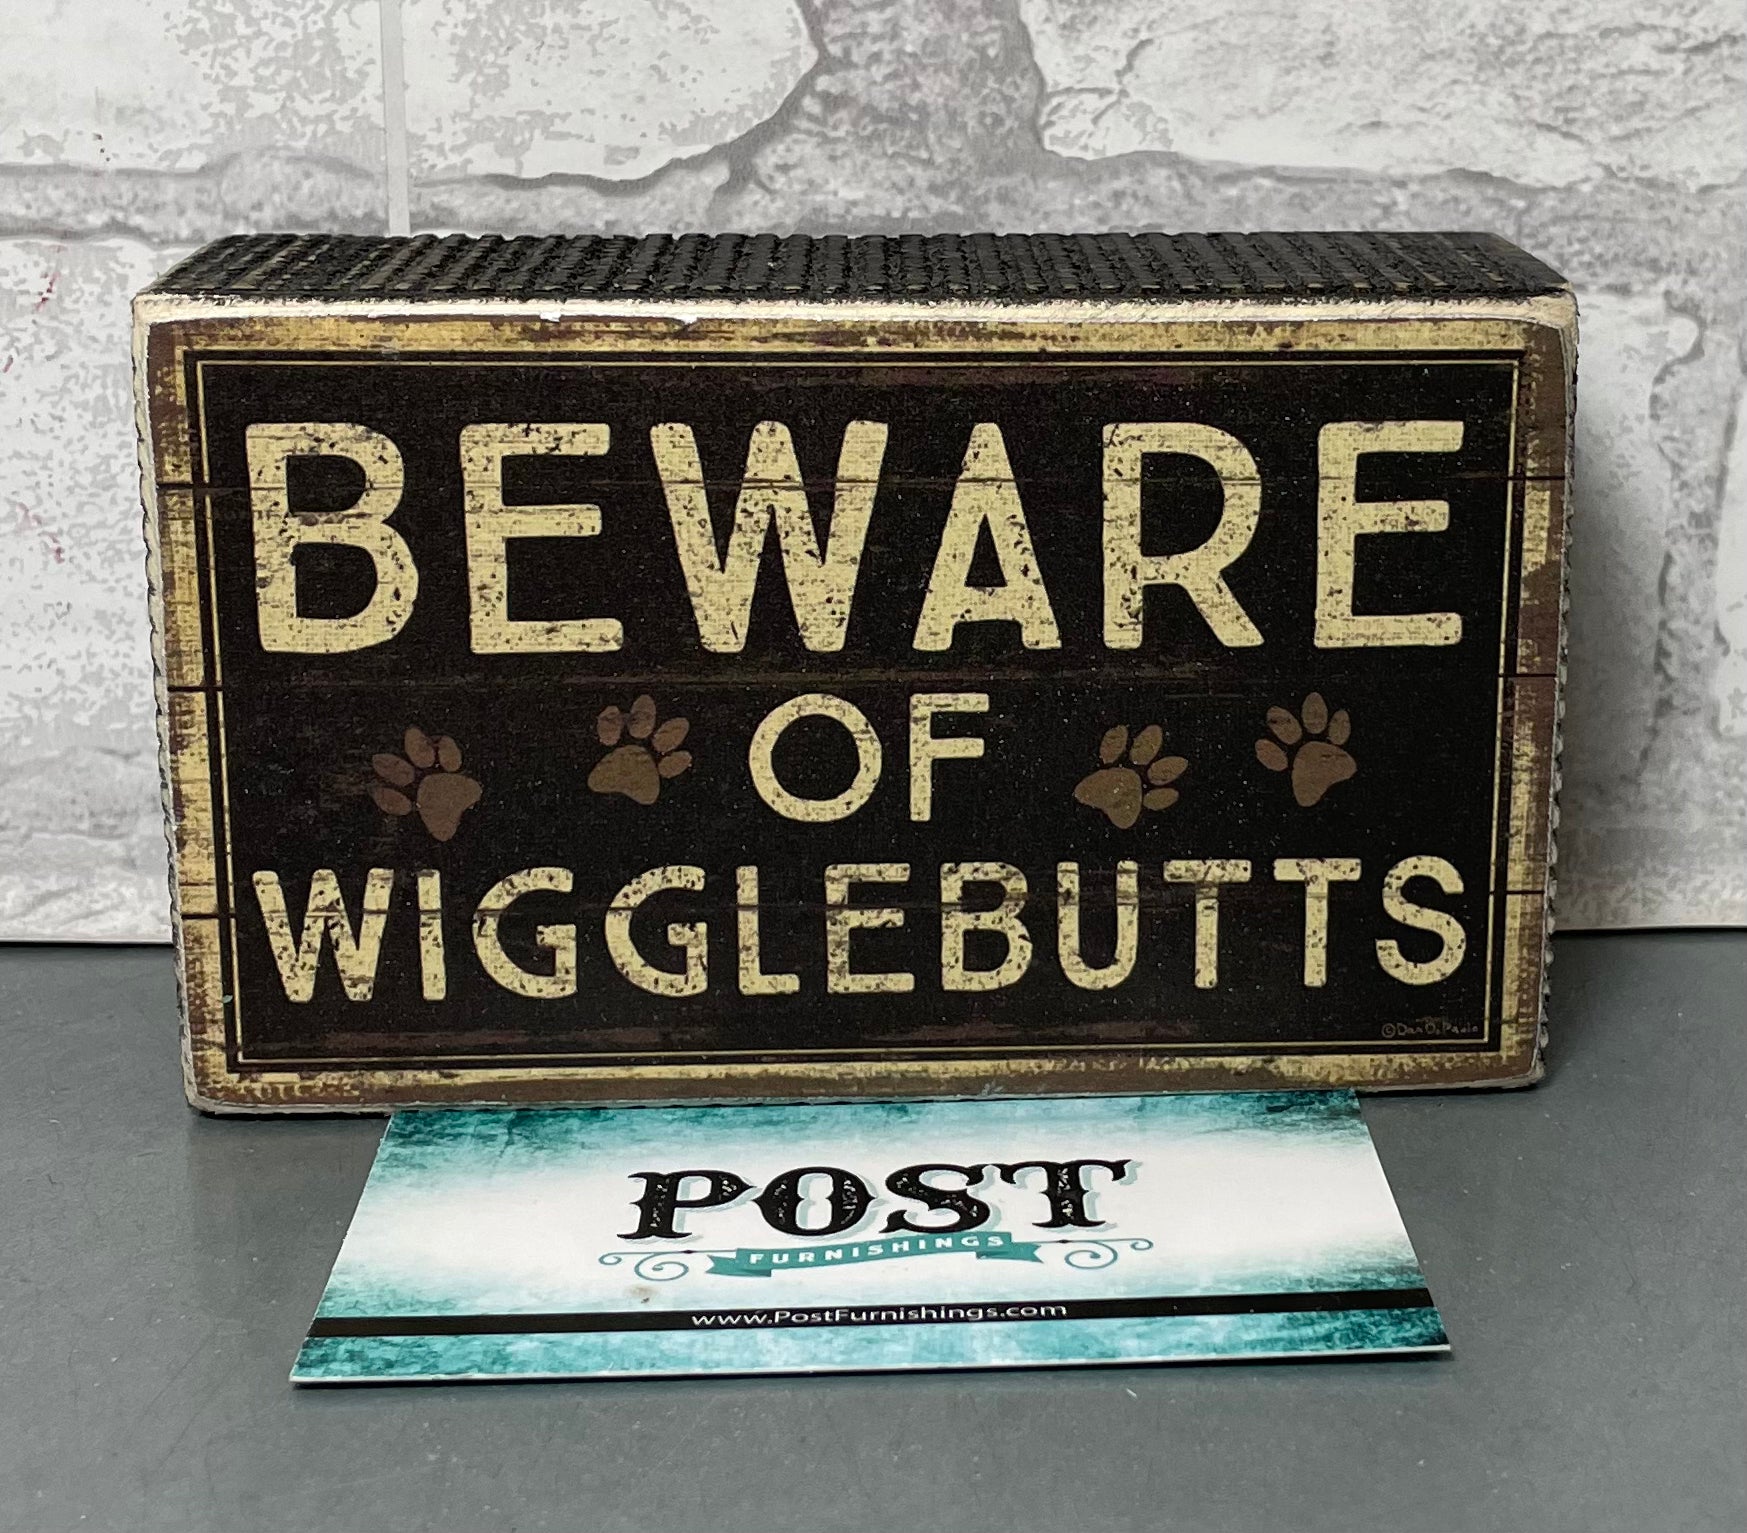 “Beware Of Wigglebutts” Sign